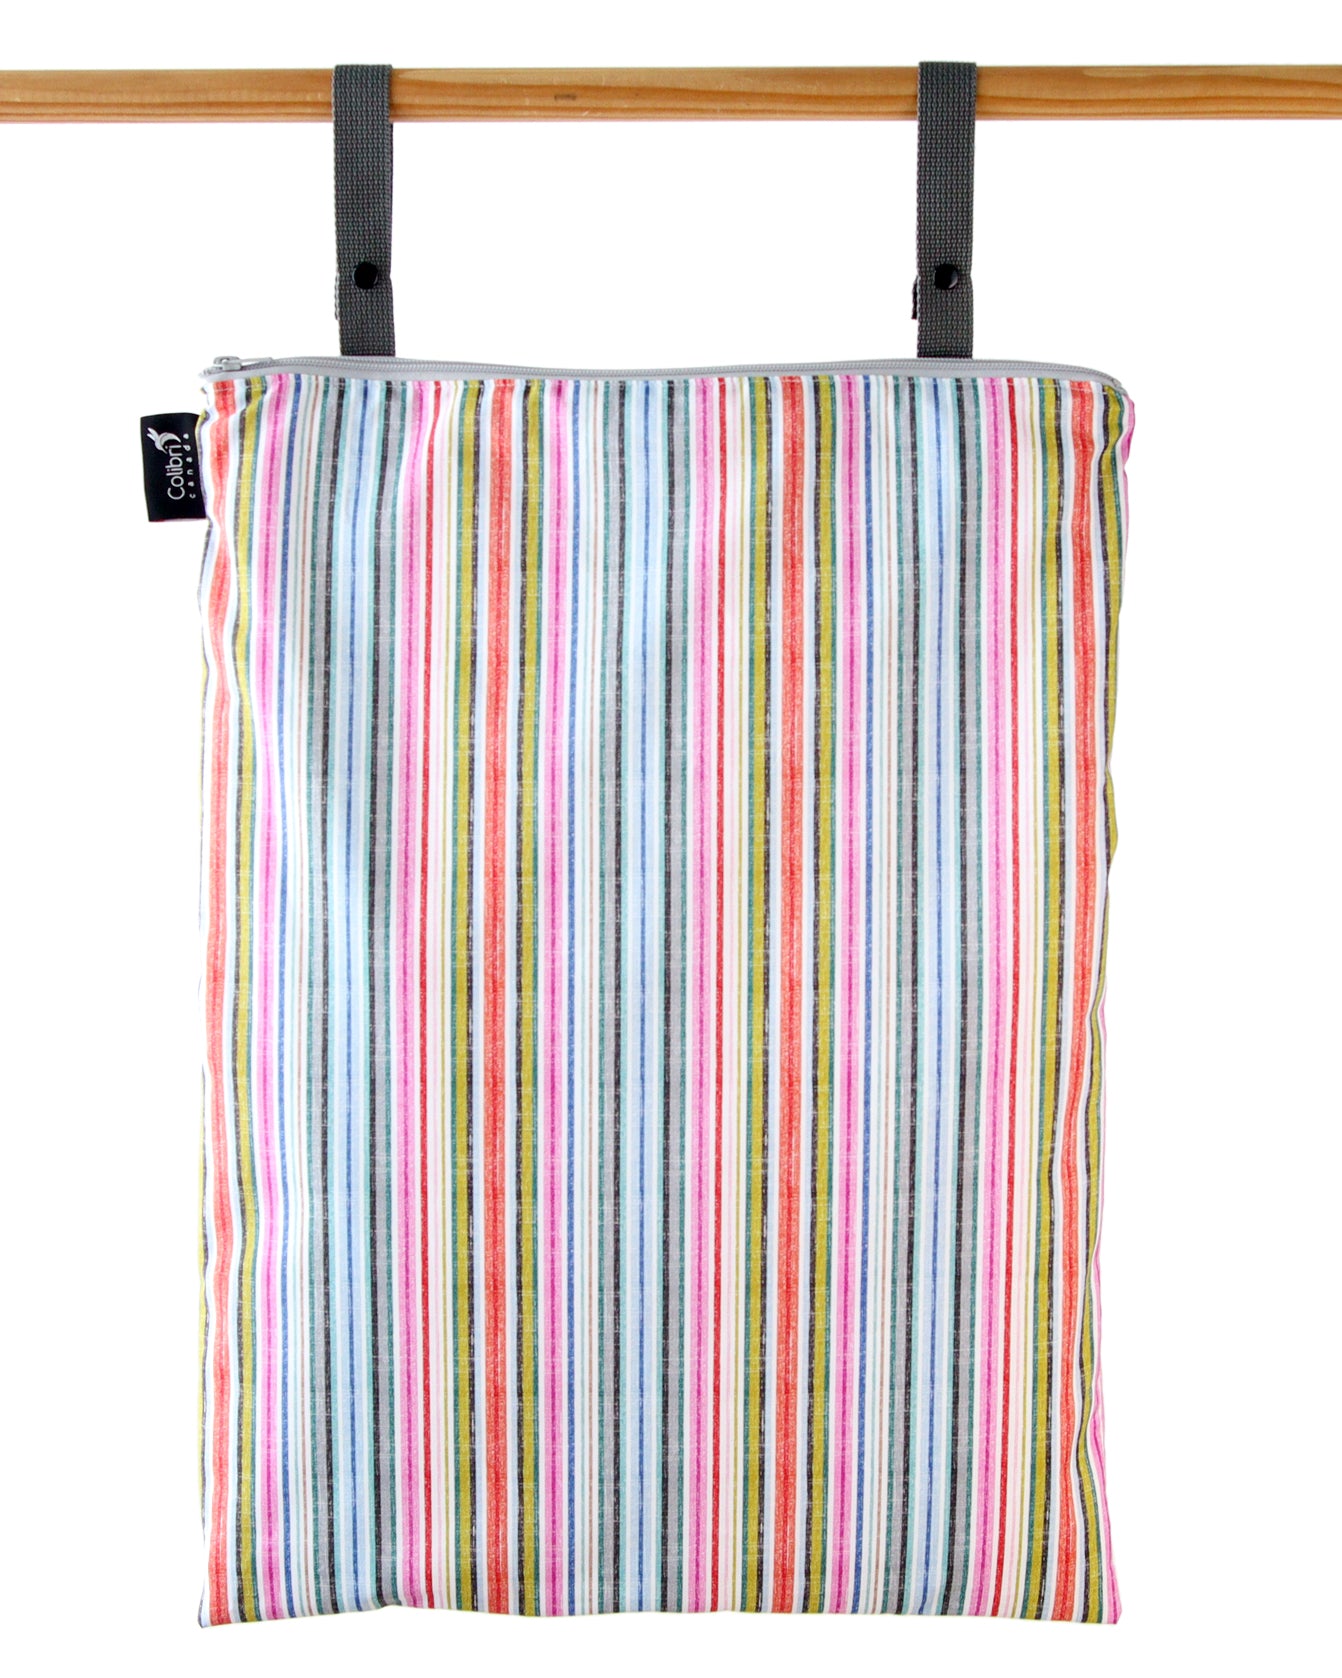 3137 - Summer Stripes Regular Wet Bag